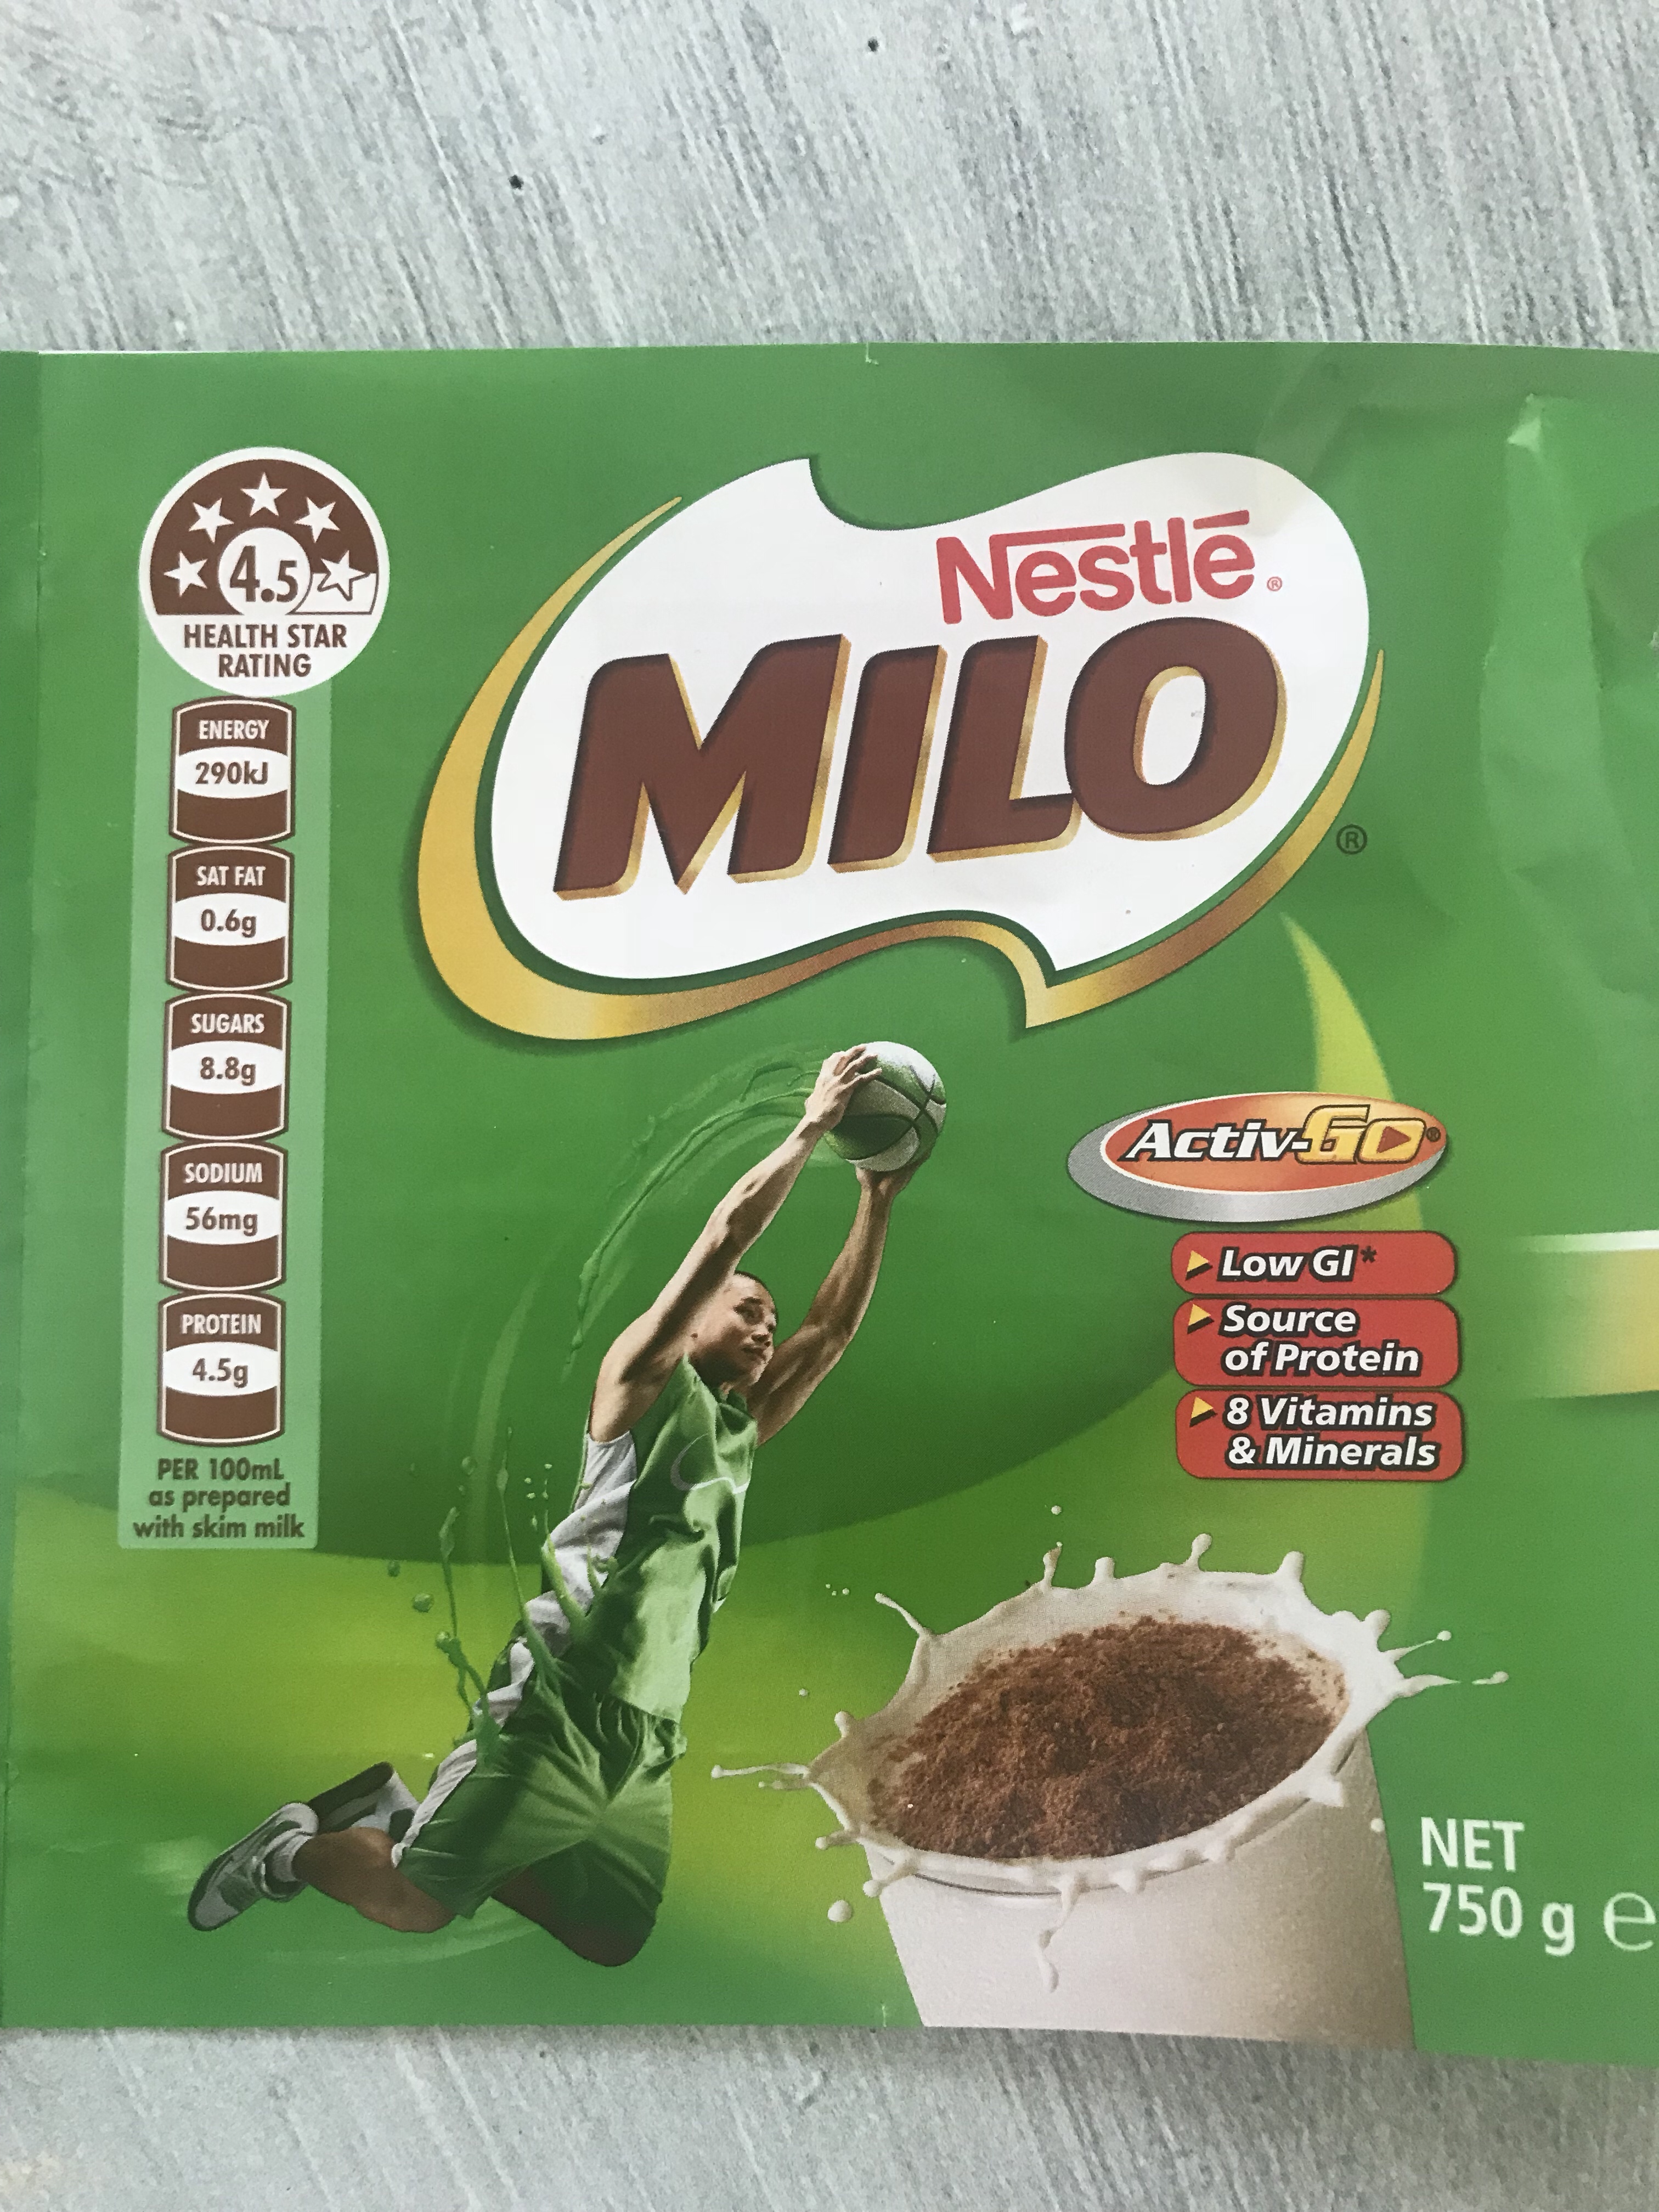 Is Milo healthy?